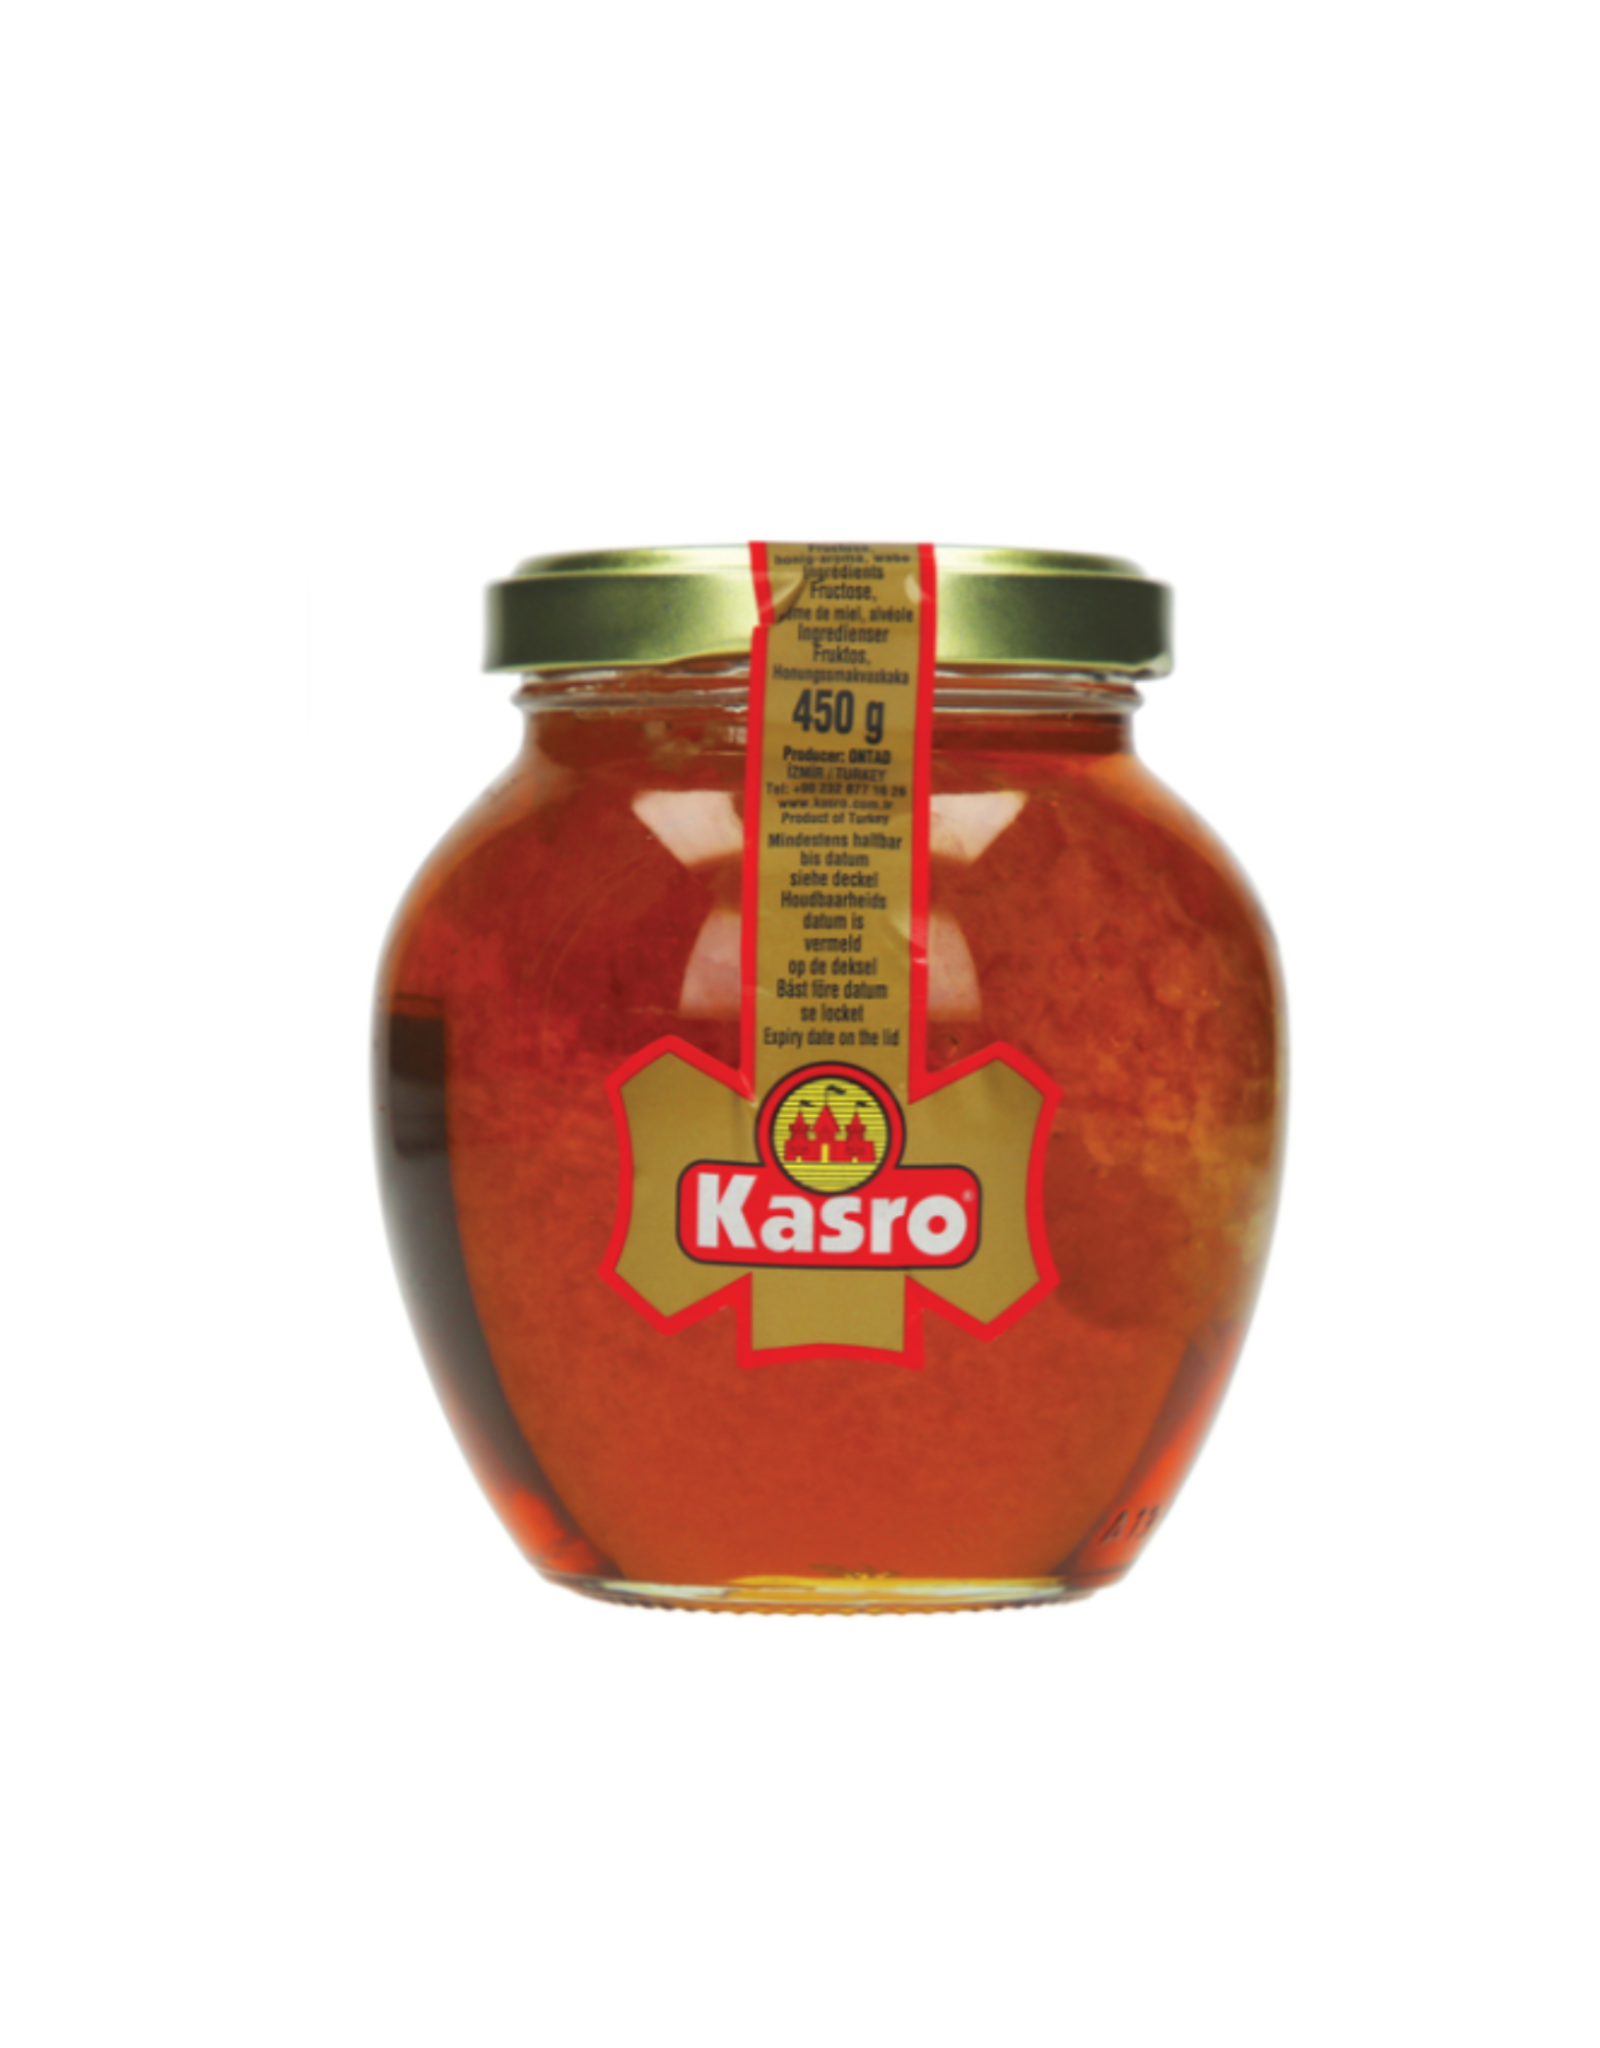 Kasro Syrup with Honey Comb - Honingraat